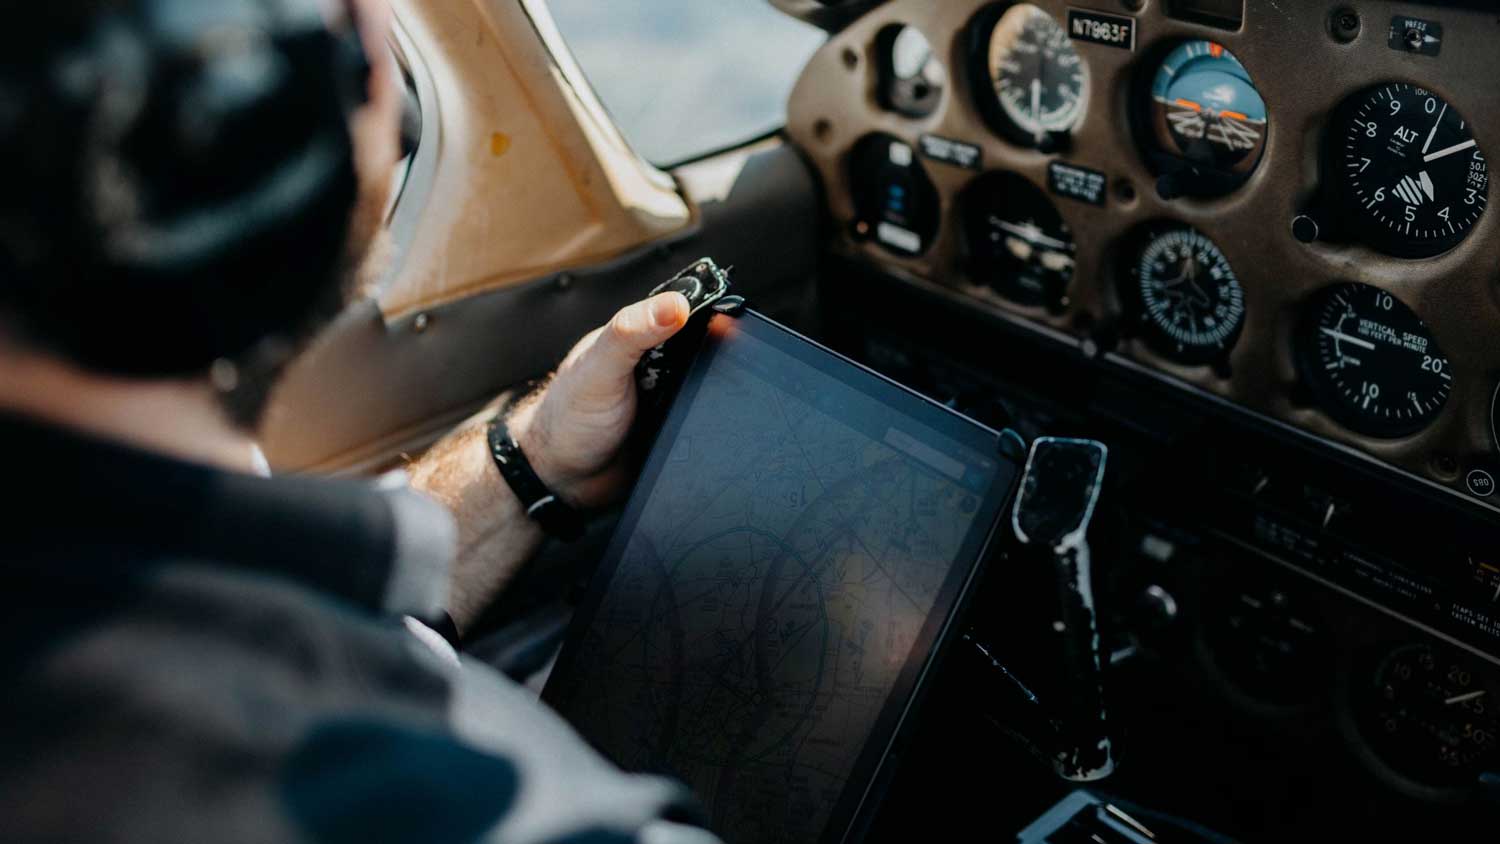 Best iPad for Pilots